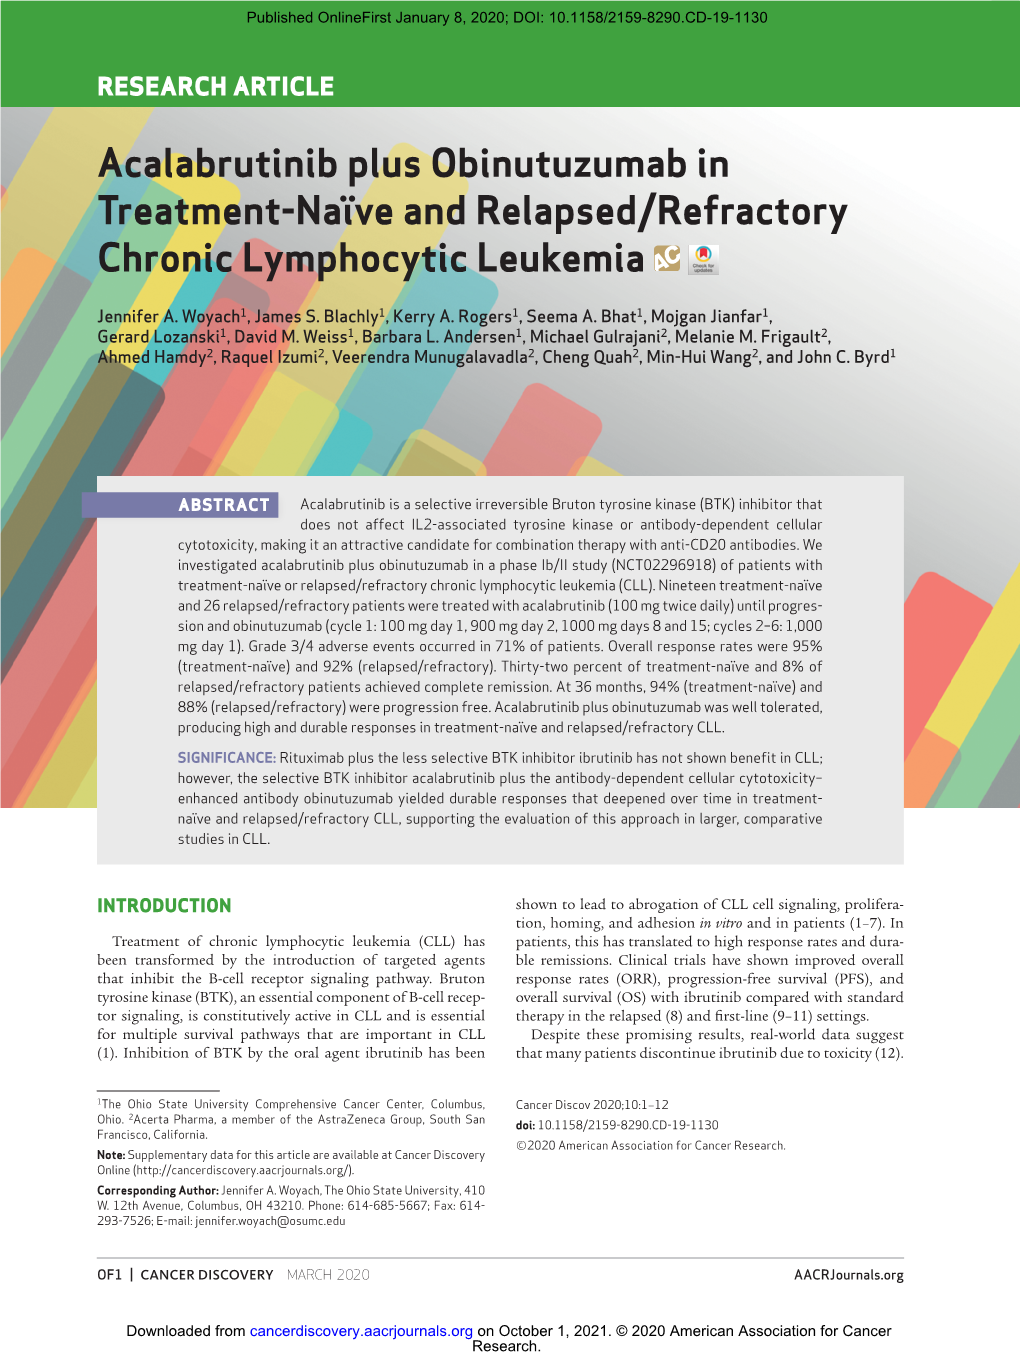 Acalabrutinib Plus Obinutuzumab in Treatment-Naïve and Relapsed/Refractory Chronic Lymphocytic Leukemia